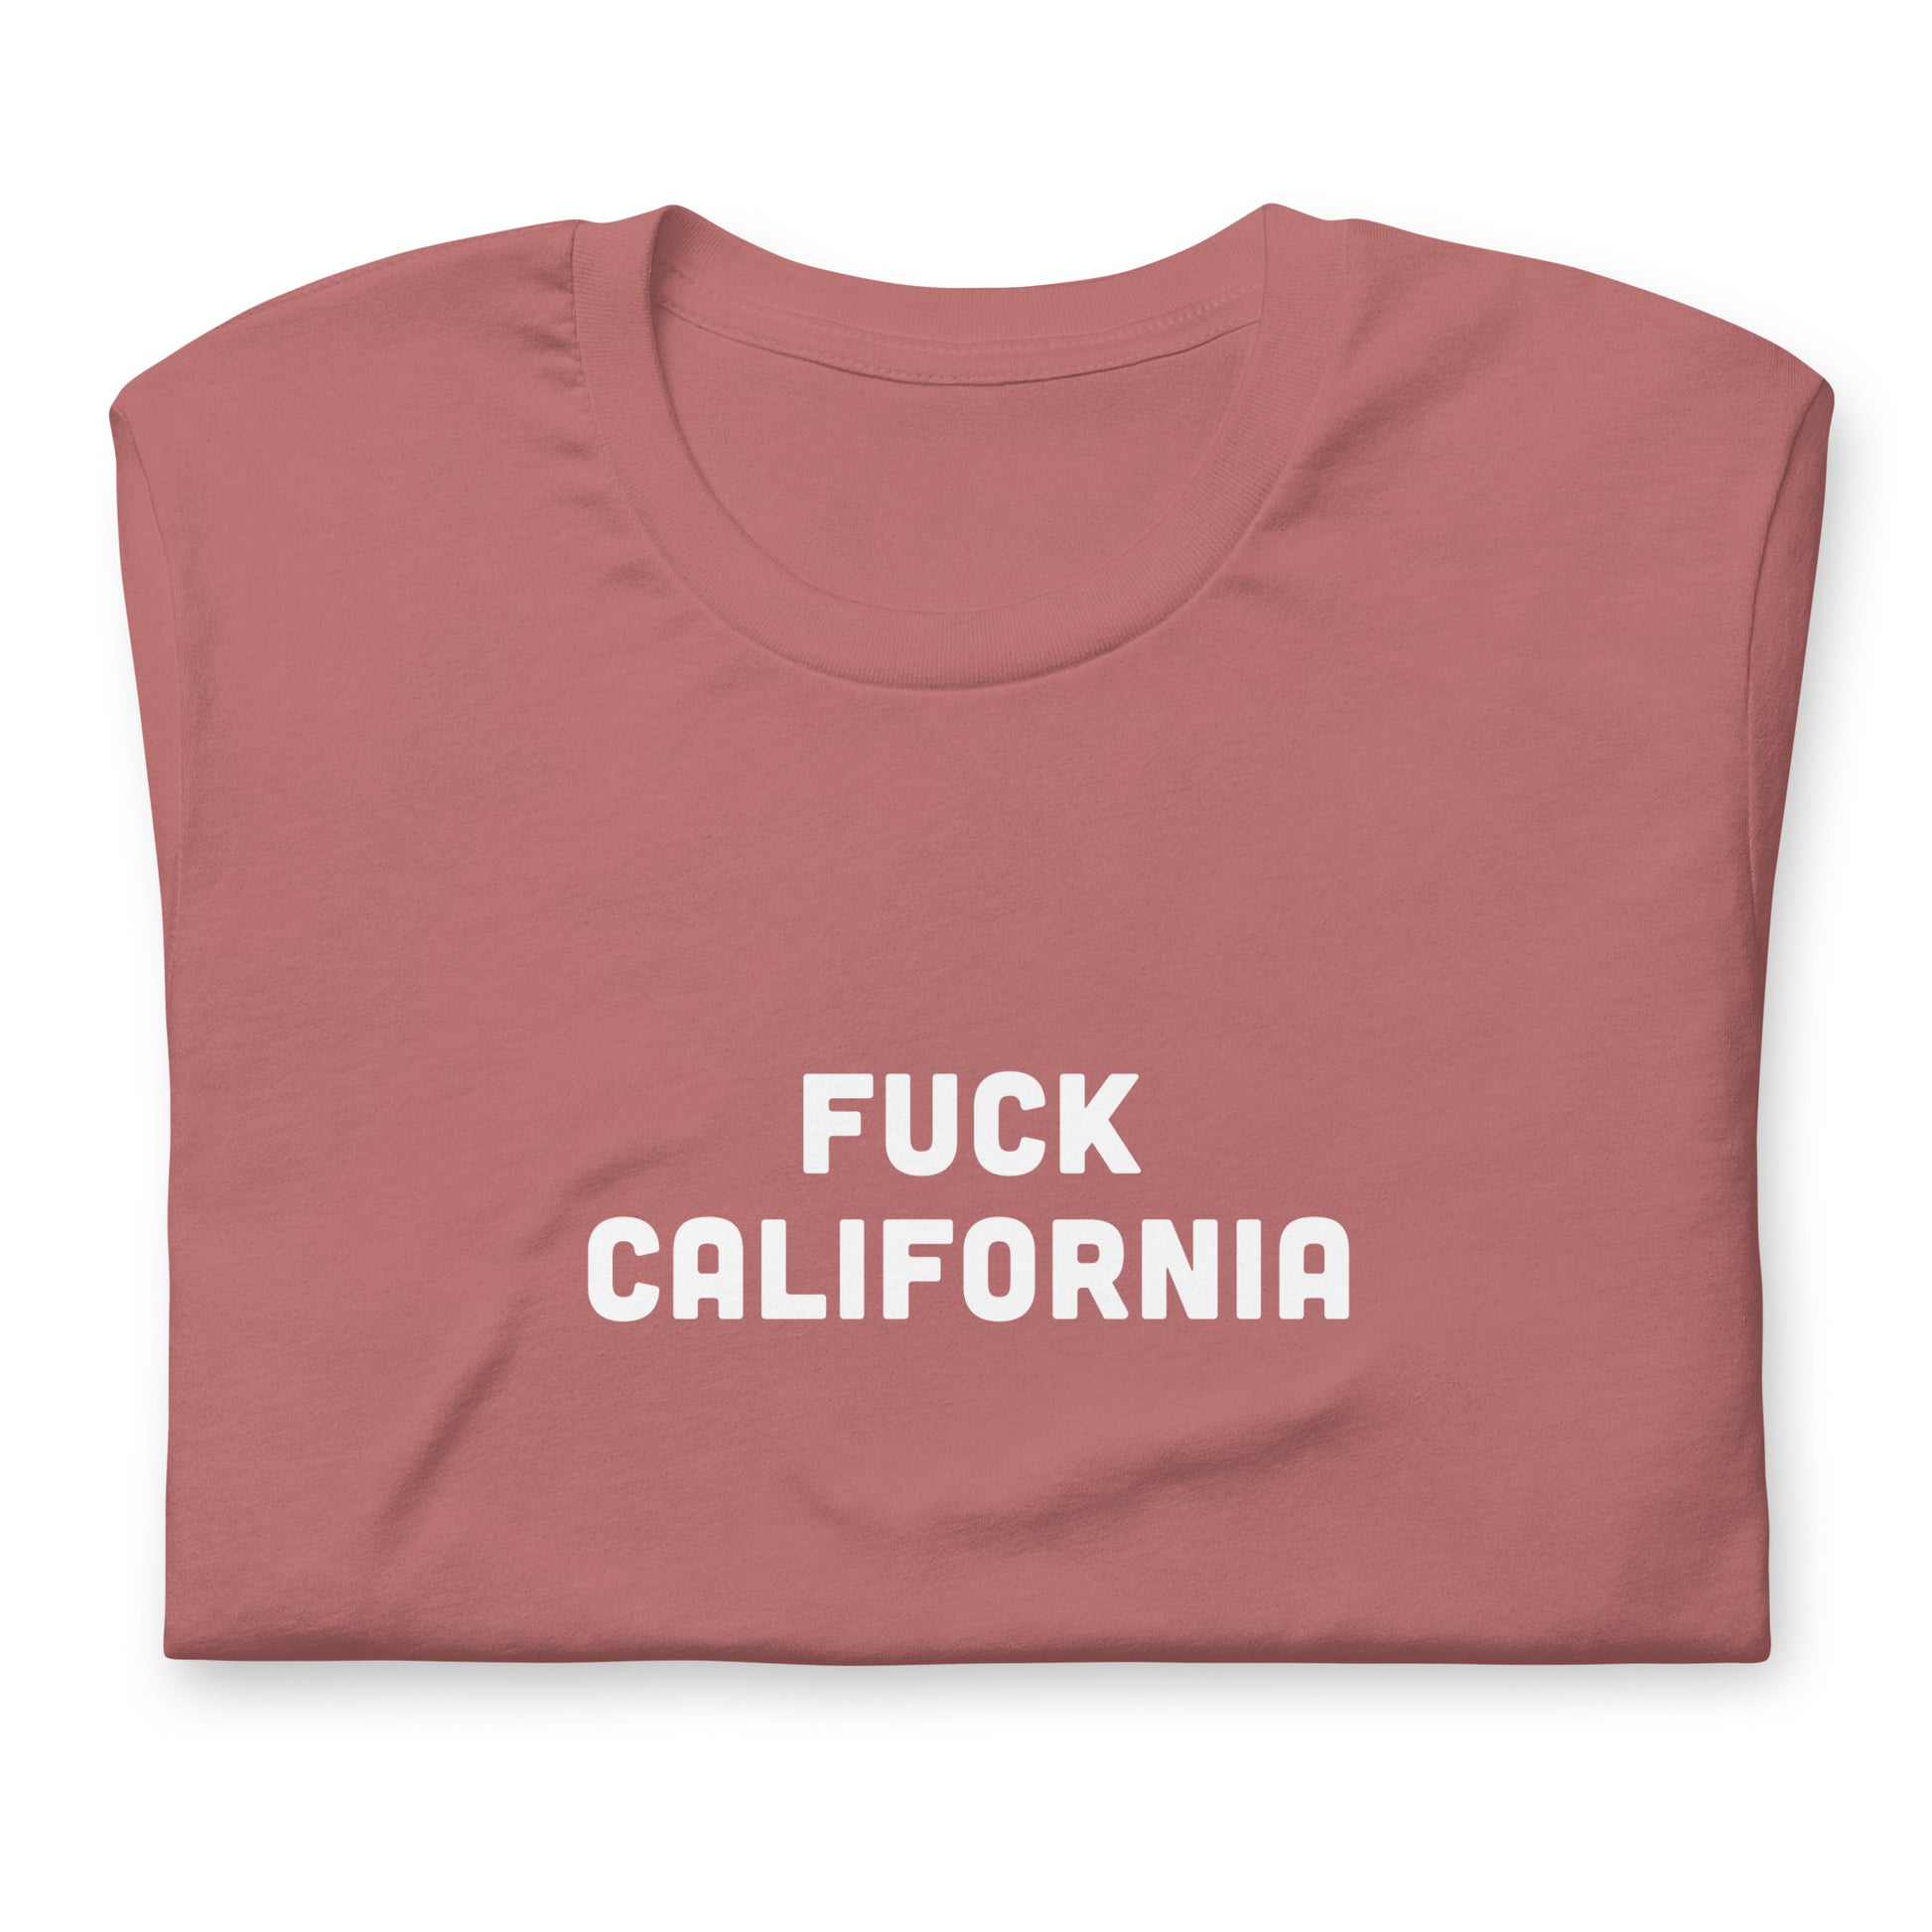 Fuck California T-Shirt Size 2XL Color Navy